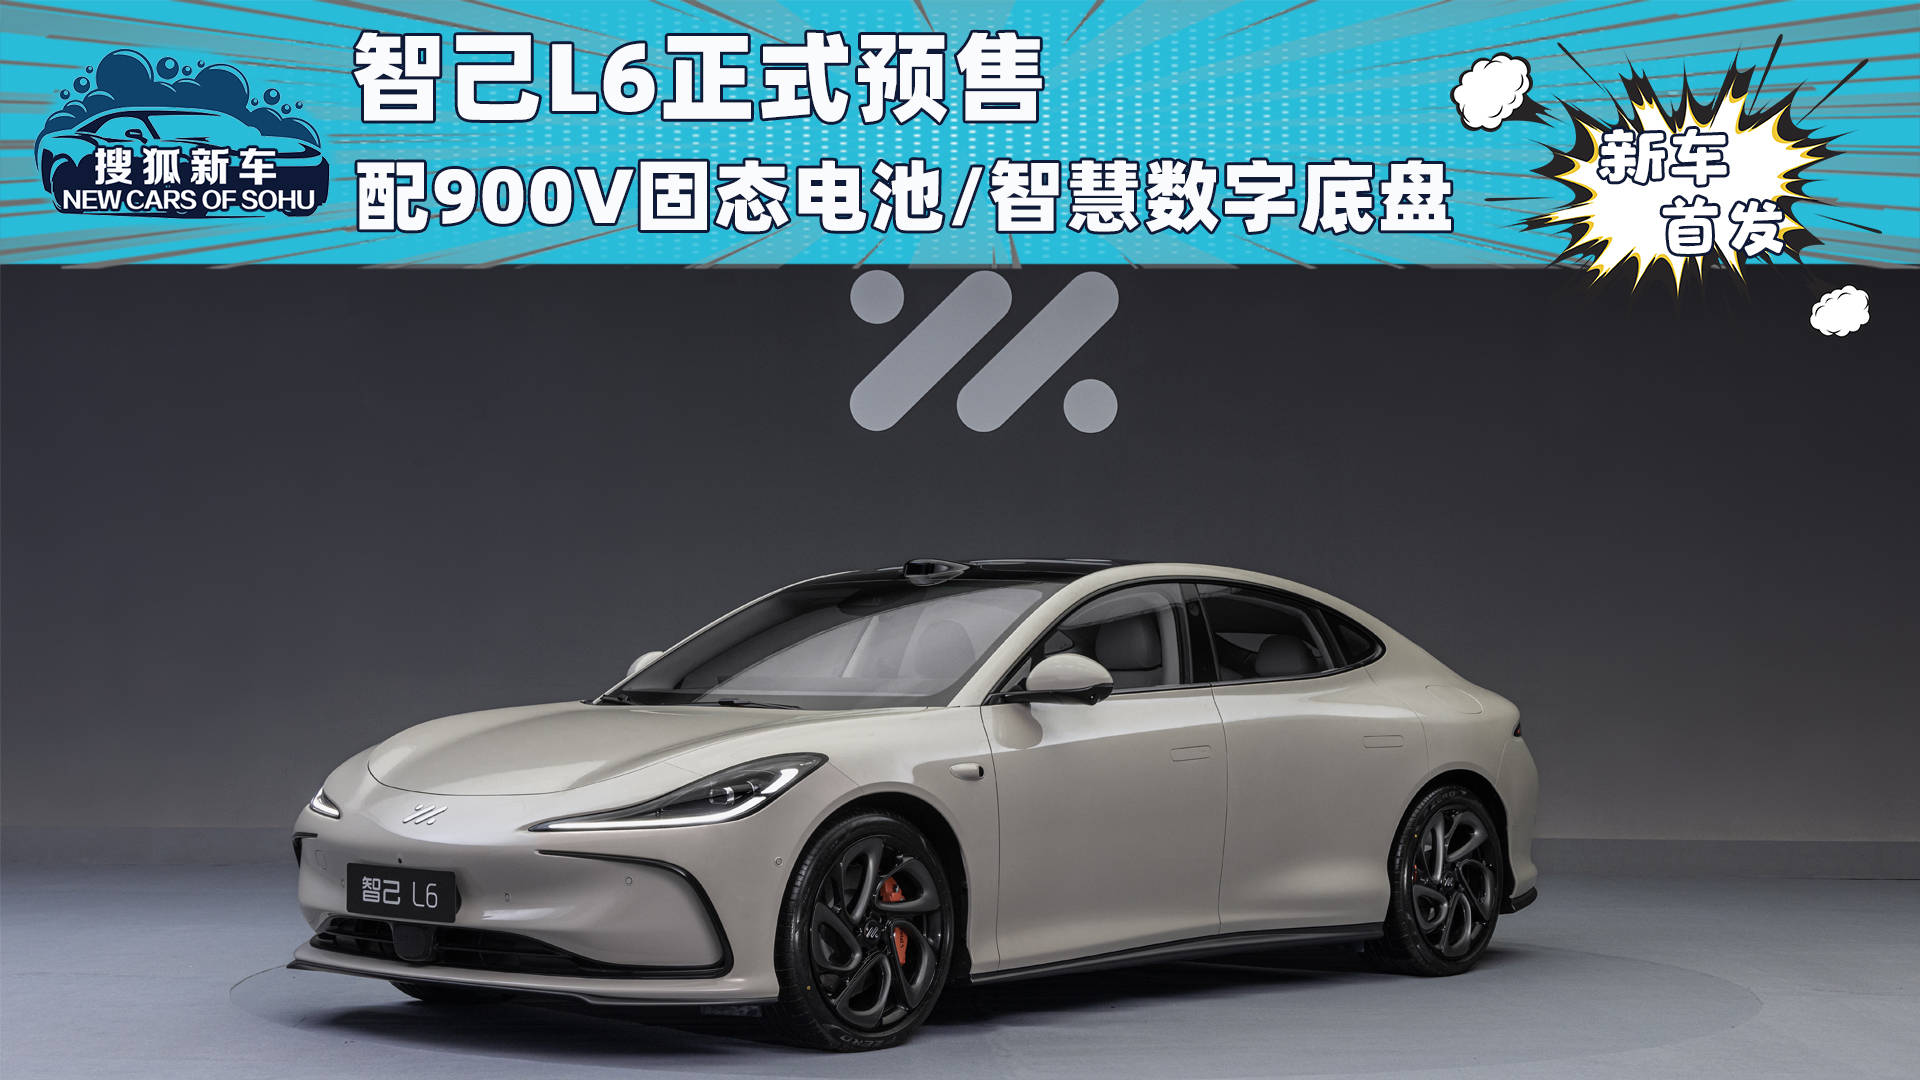 900V固态电池/预售价23万智己L6正式上市并开启预售_搜狐汽车_搜狐汽车。com